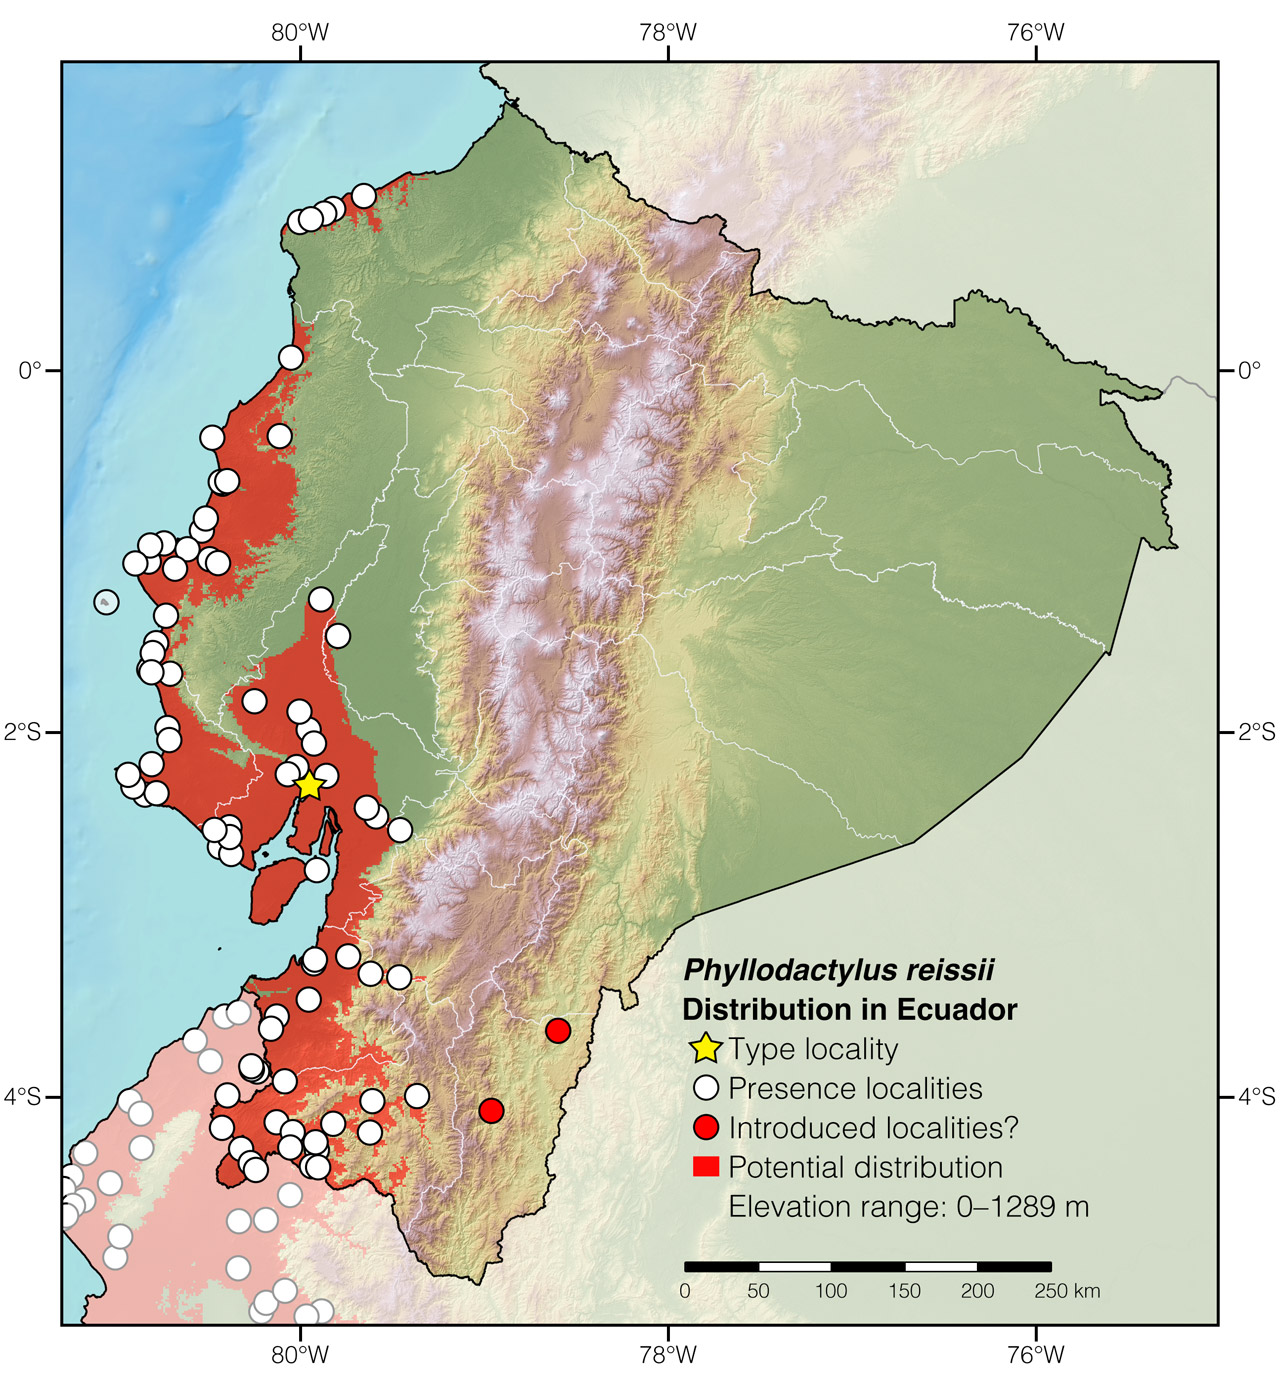 Distribution of Phyllodactylus reissii in Ecuador